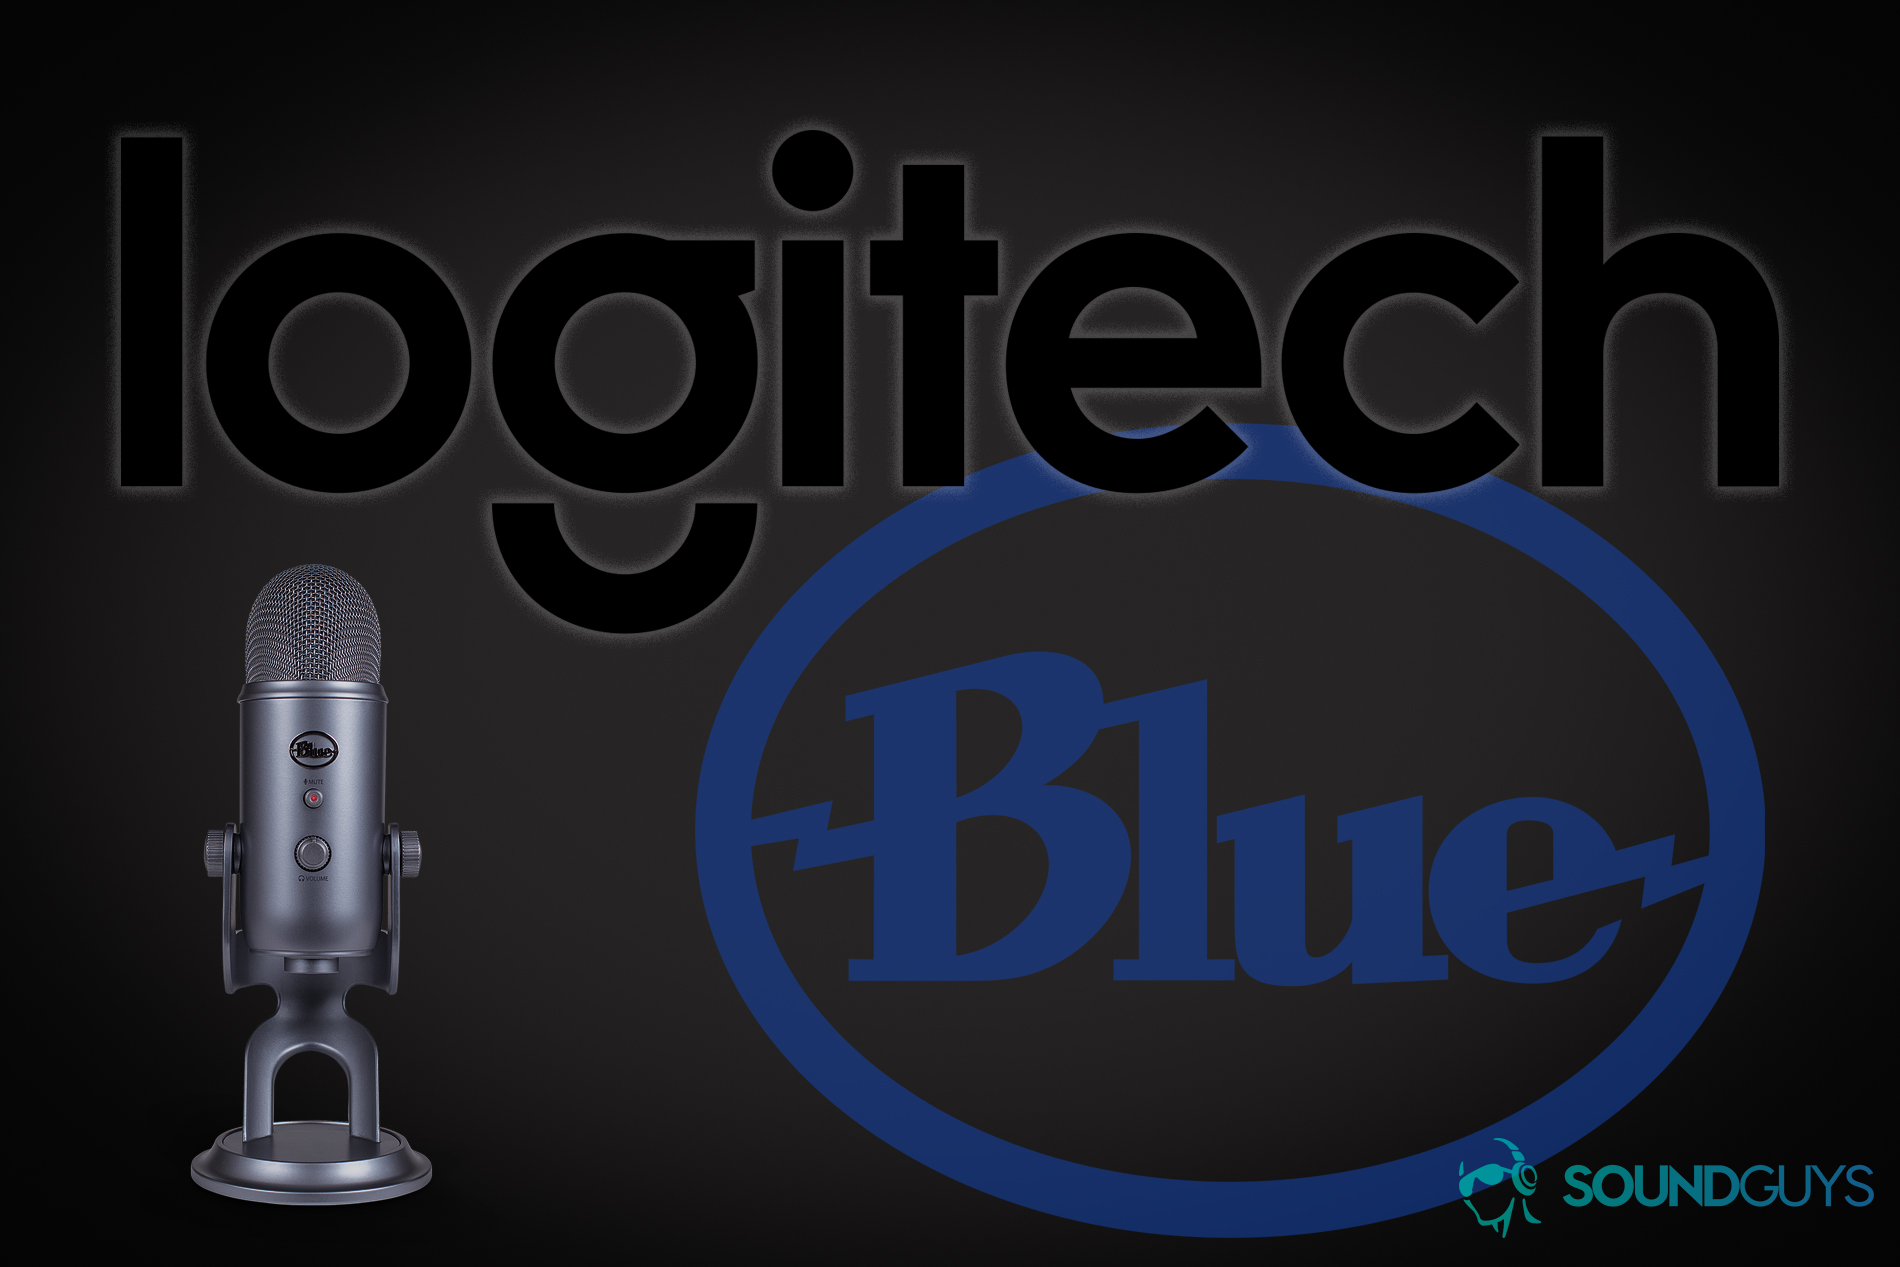 https://www.soundguys.com/wp-content/uploads/2018/07/logitech-buys-blue-microphones.jpg